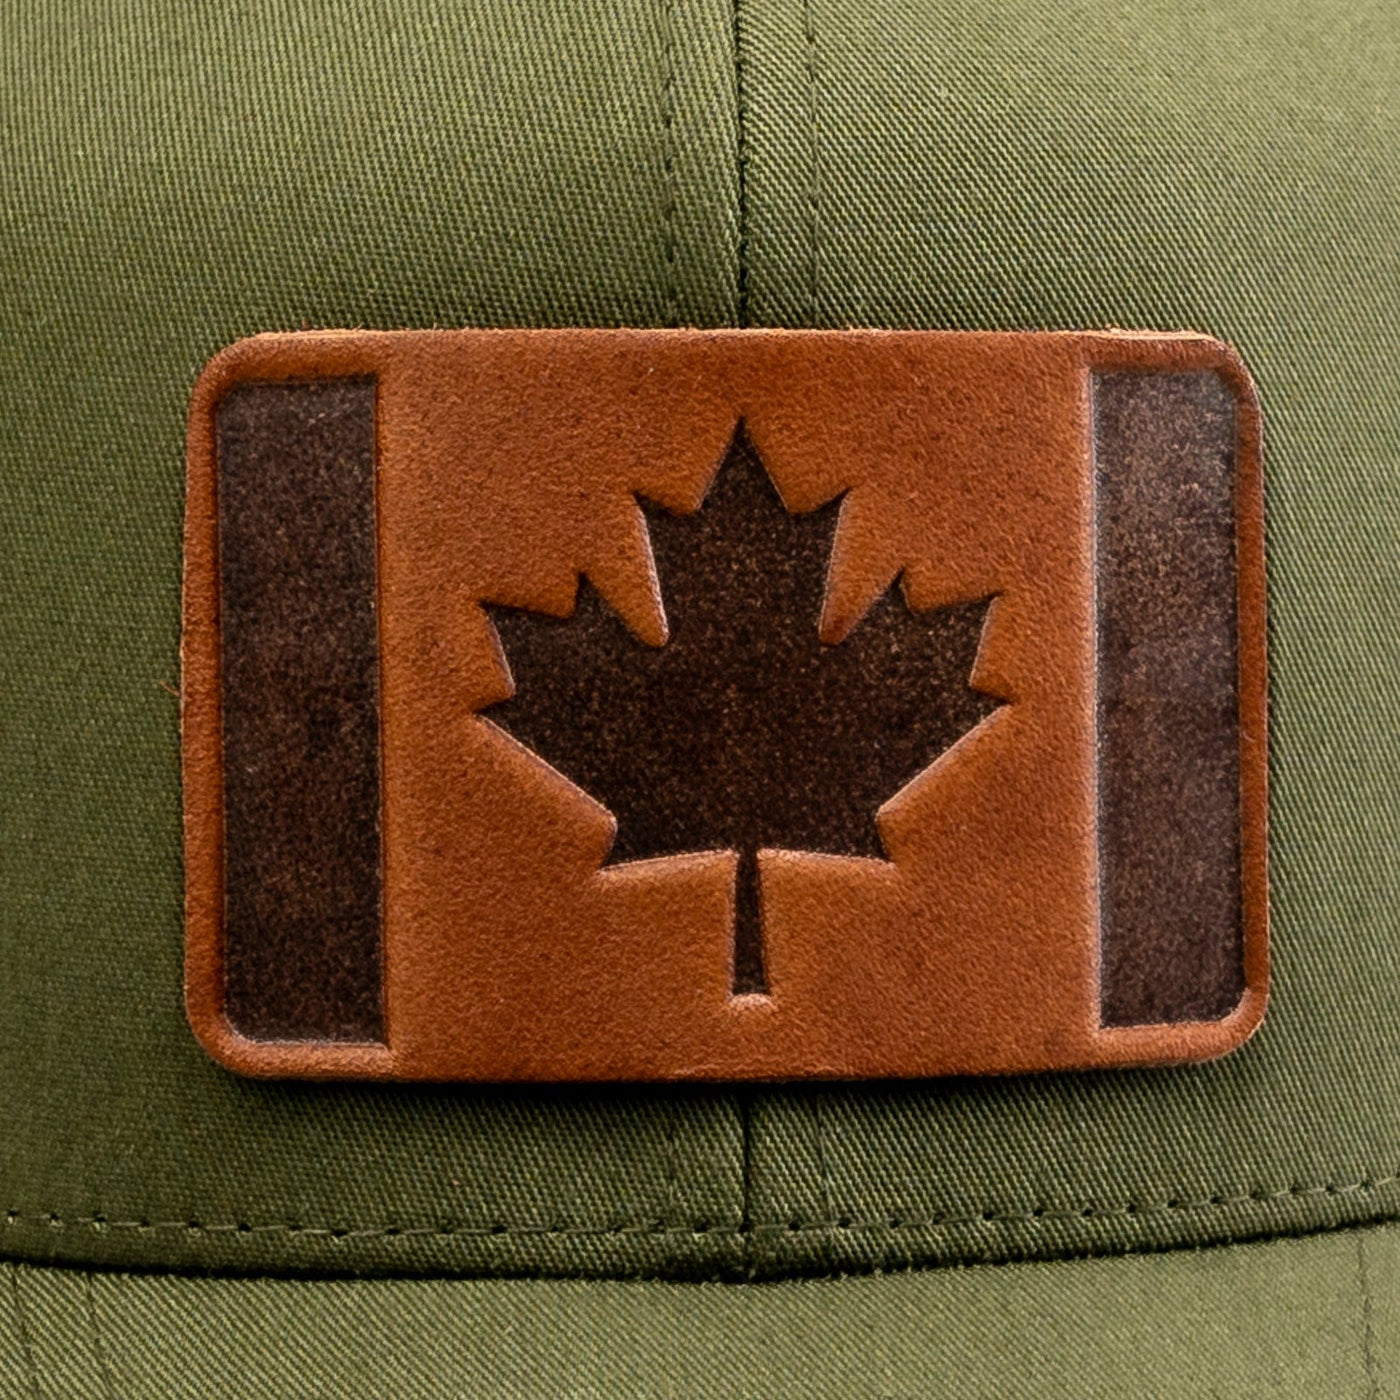 Canadian Flag Hat Popov Leather®